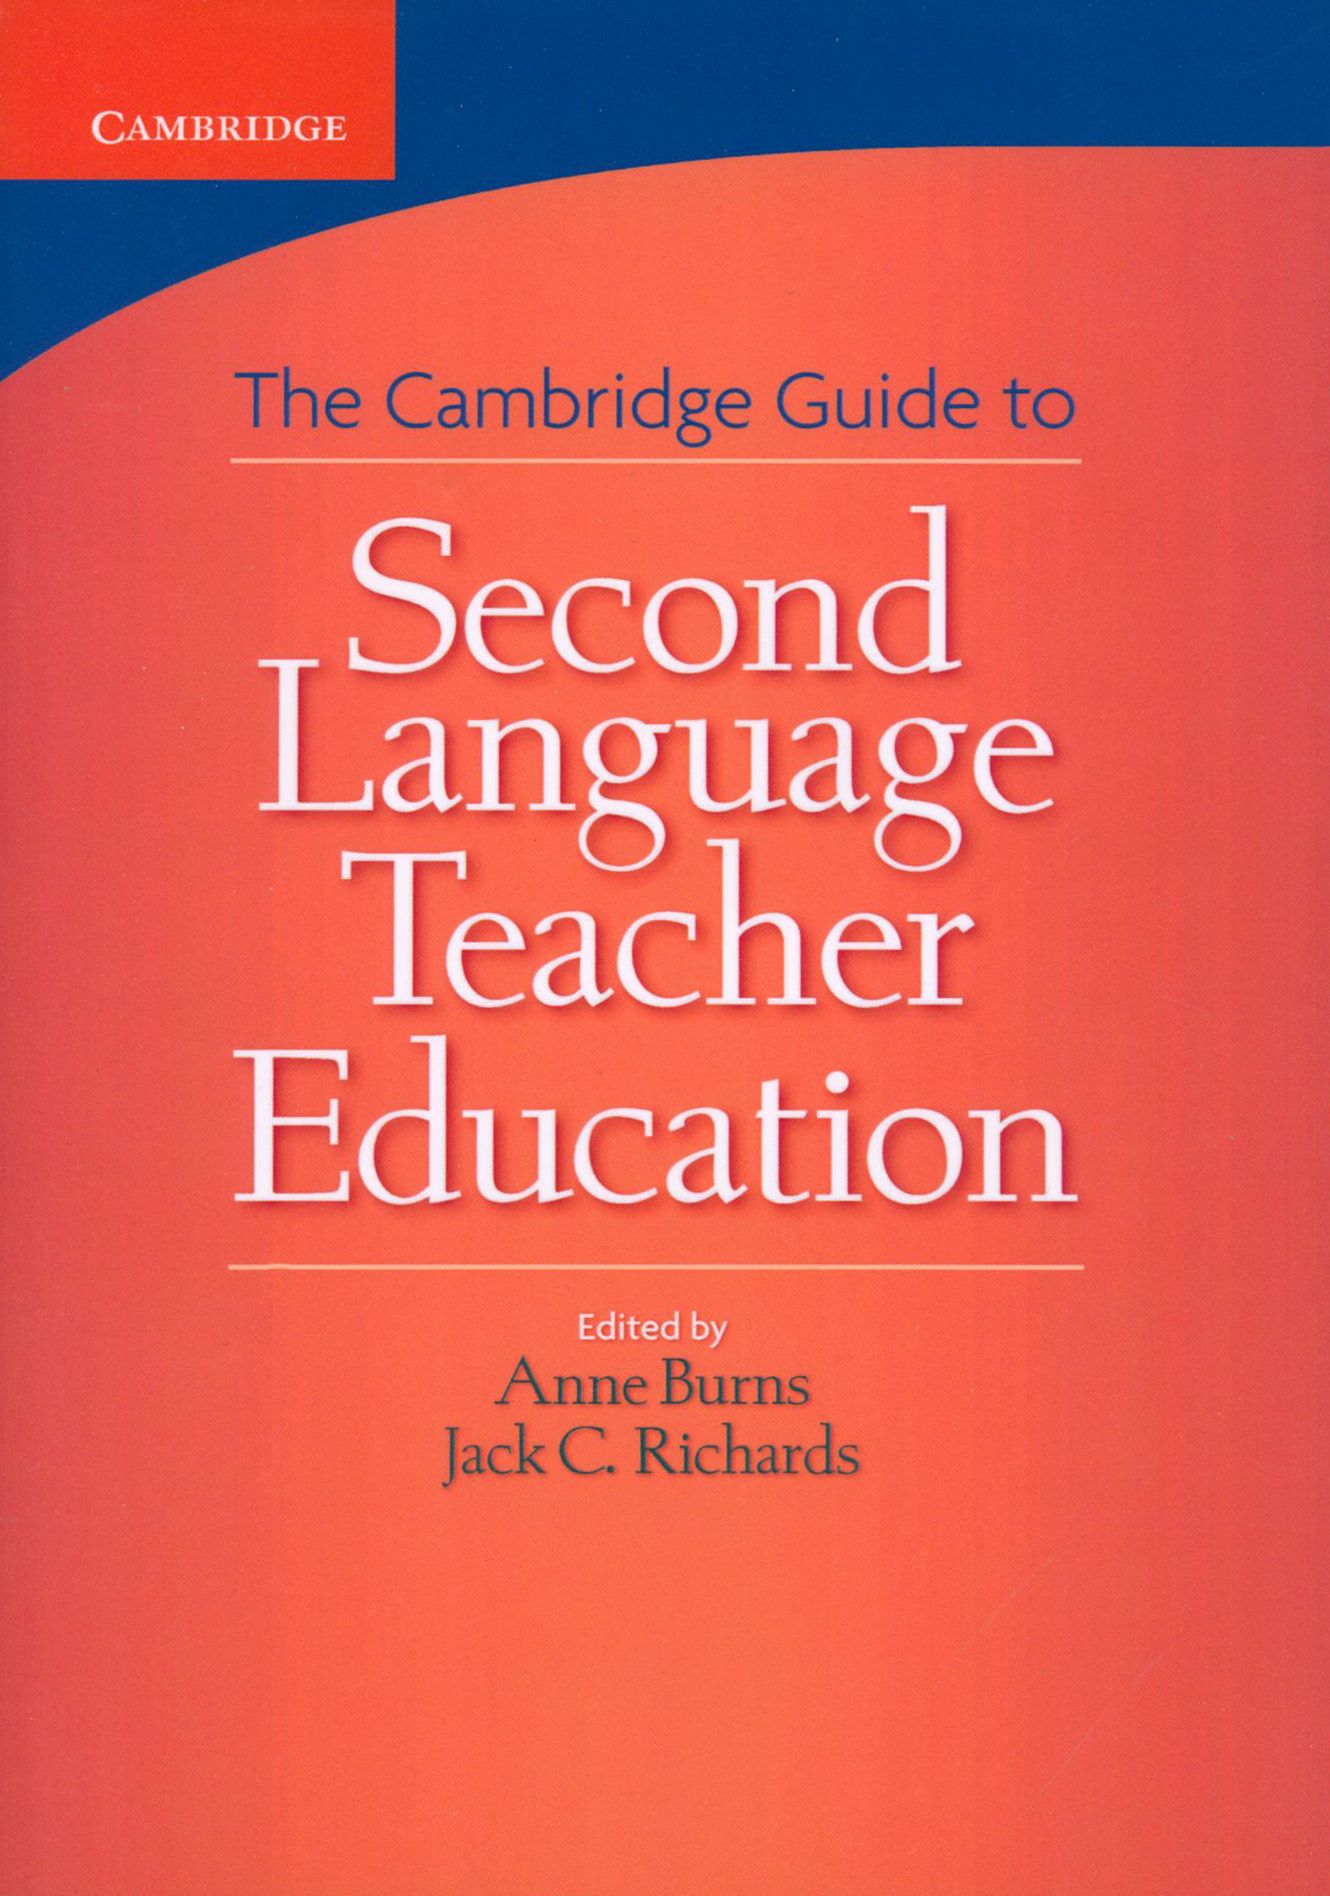 Cambridge teachers book. Деловой английский. Cambridge books. Cambridge teachers. Education debates and Issues.